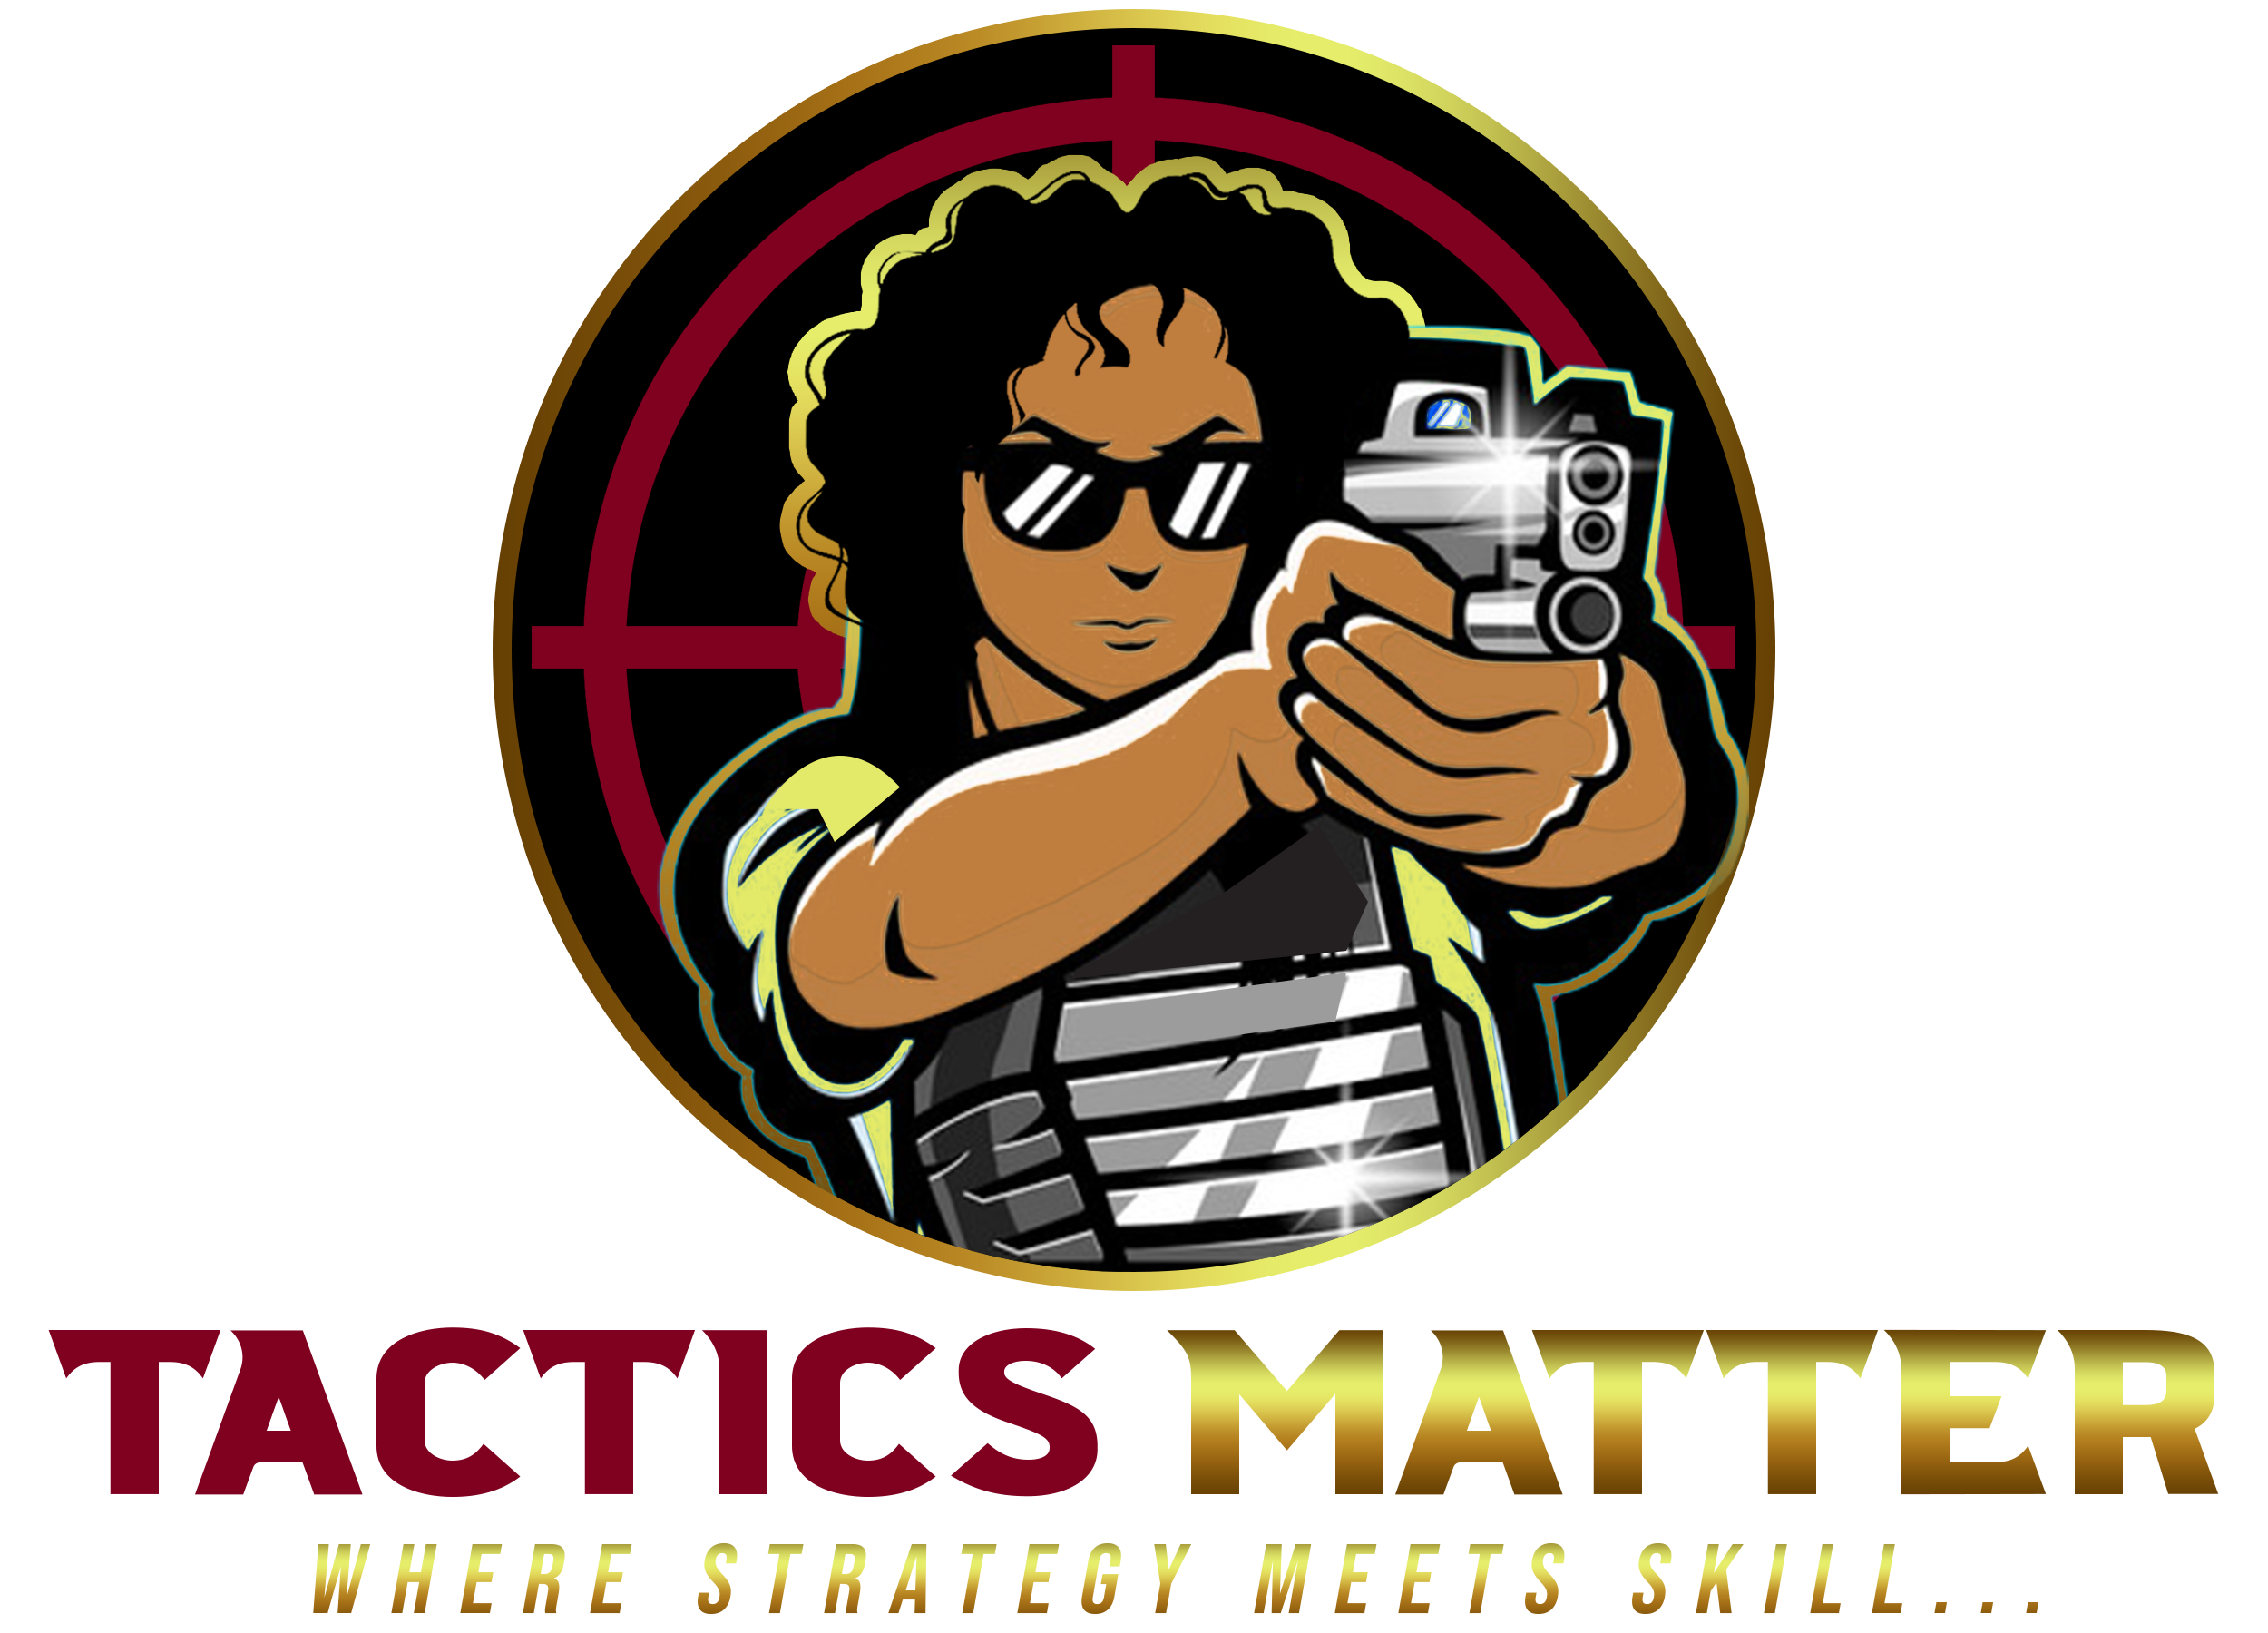 tactics matter logo image